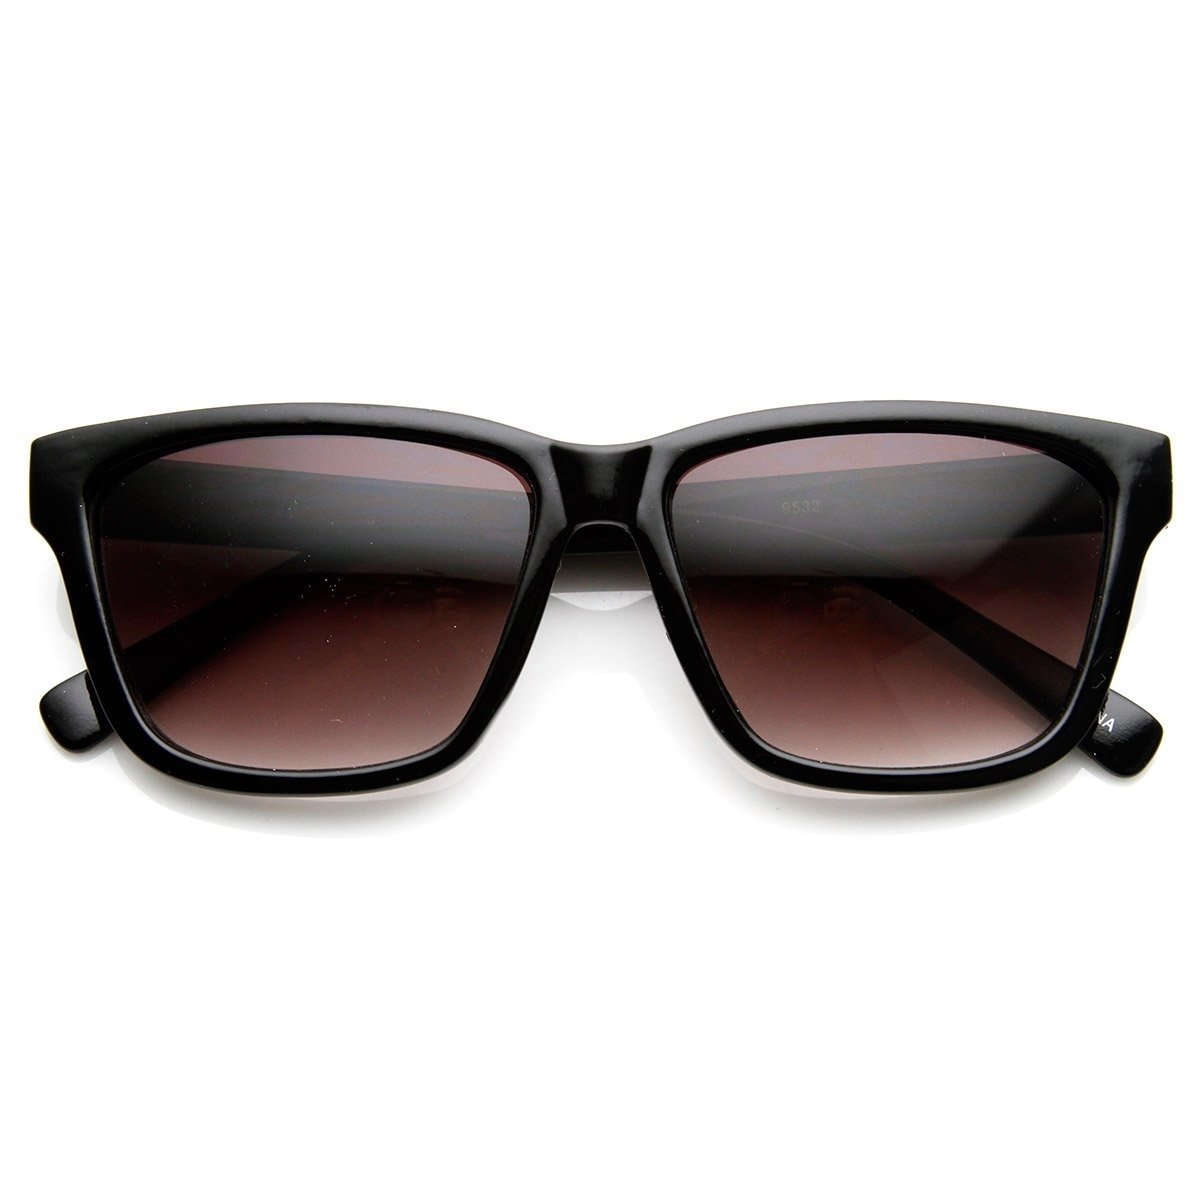 Retro Fashion Modified Squared Frame Horn Rimmed Sunglasses - Smoke-Tortoise